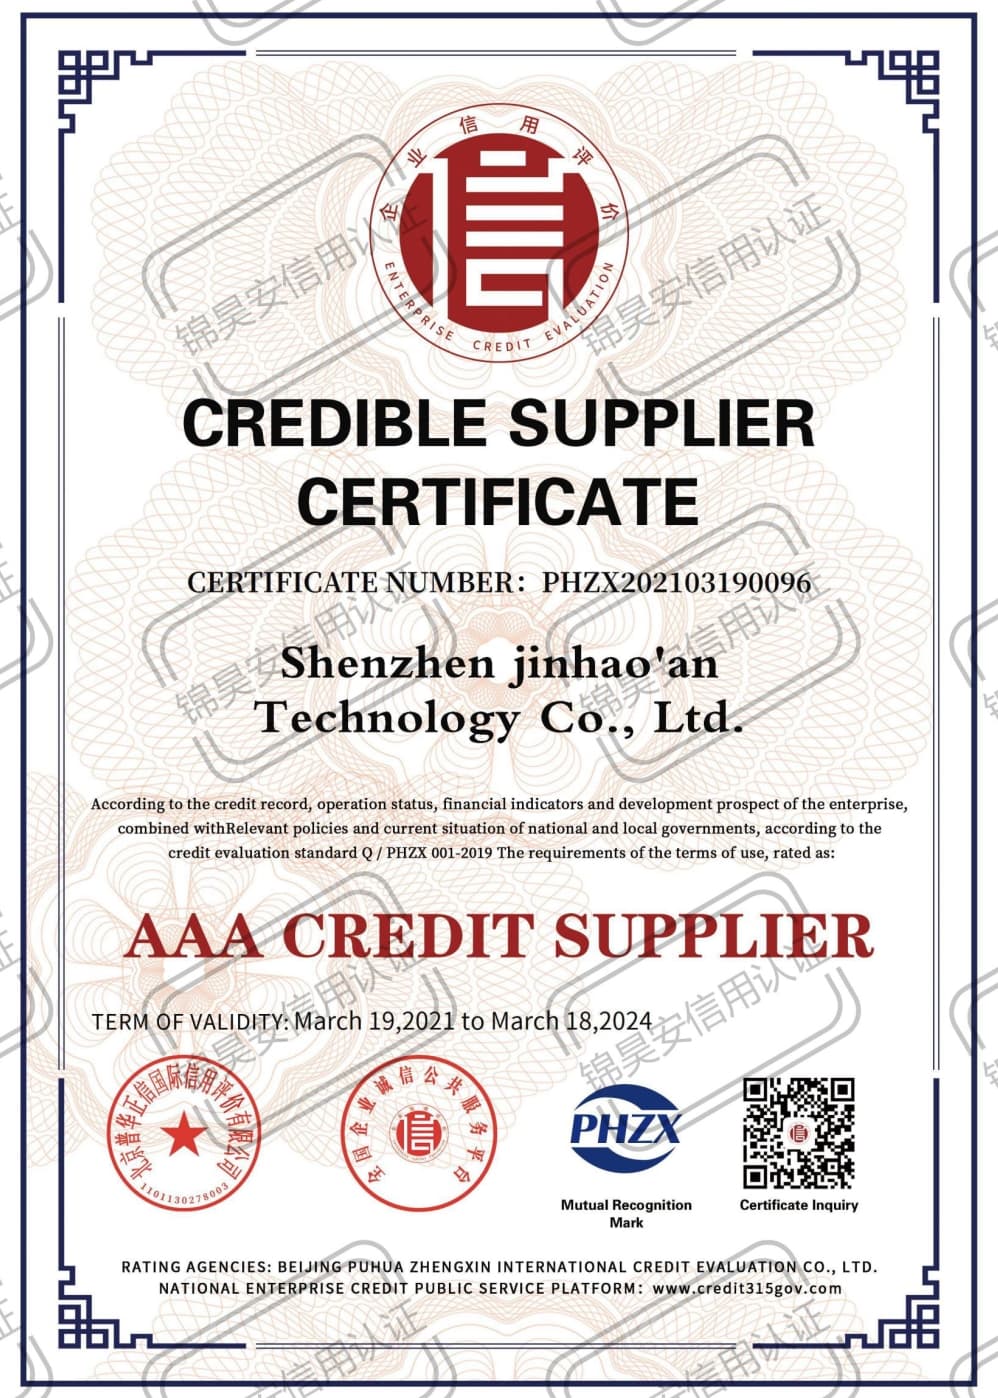 Credible Supplier Certificate